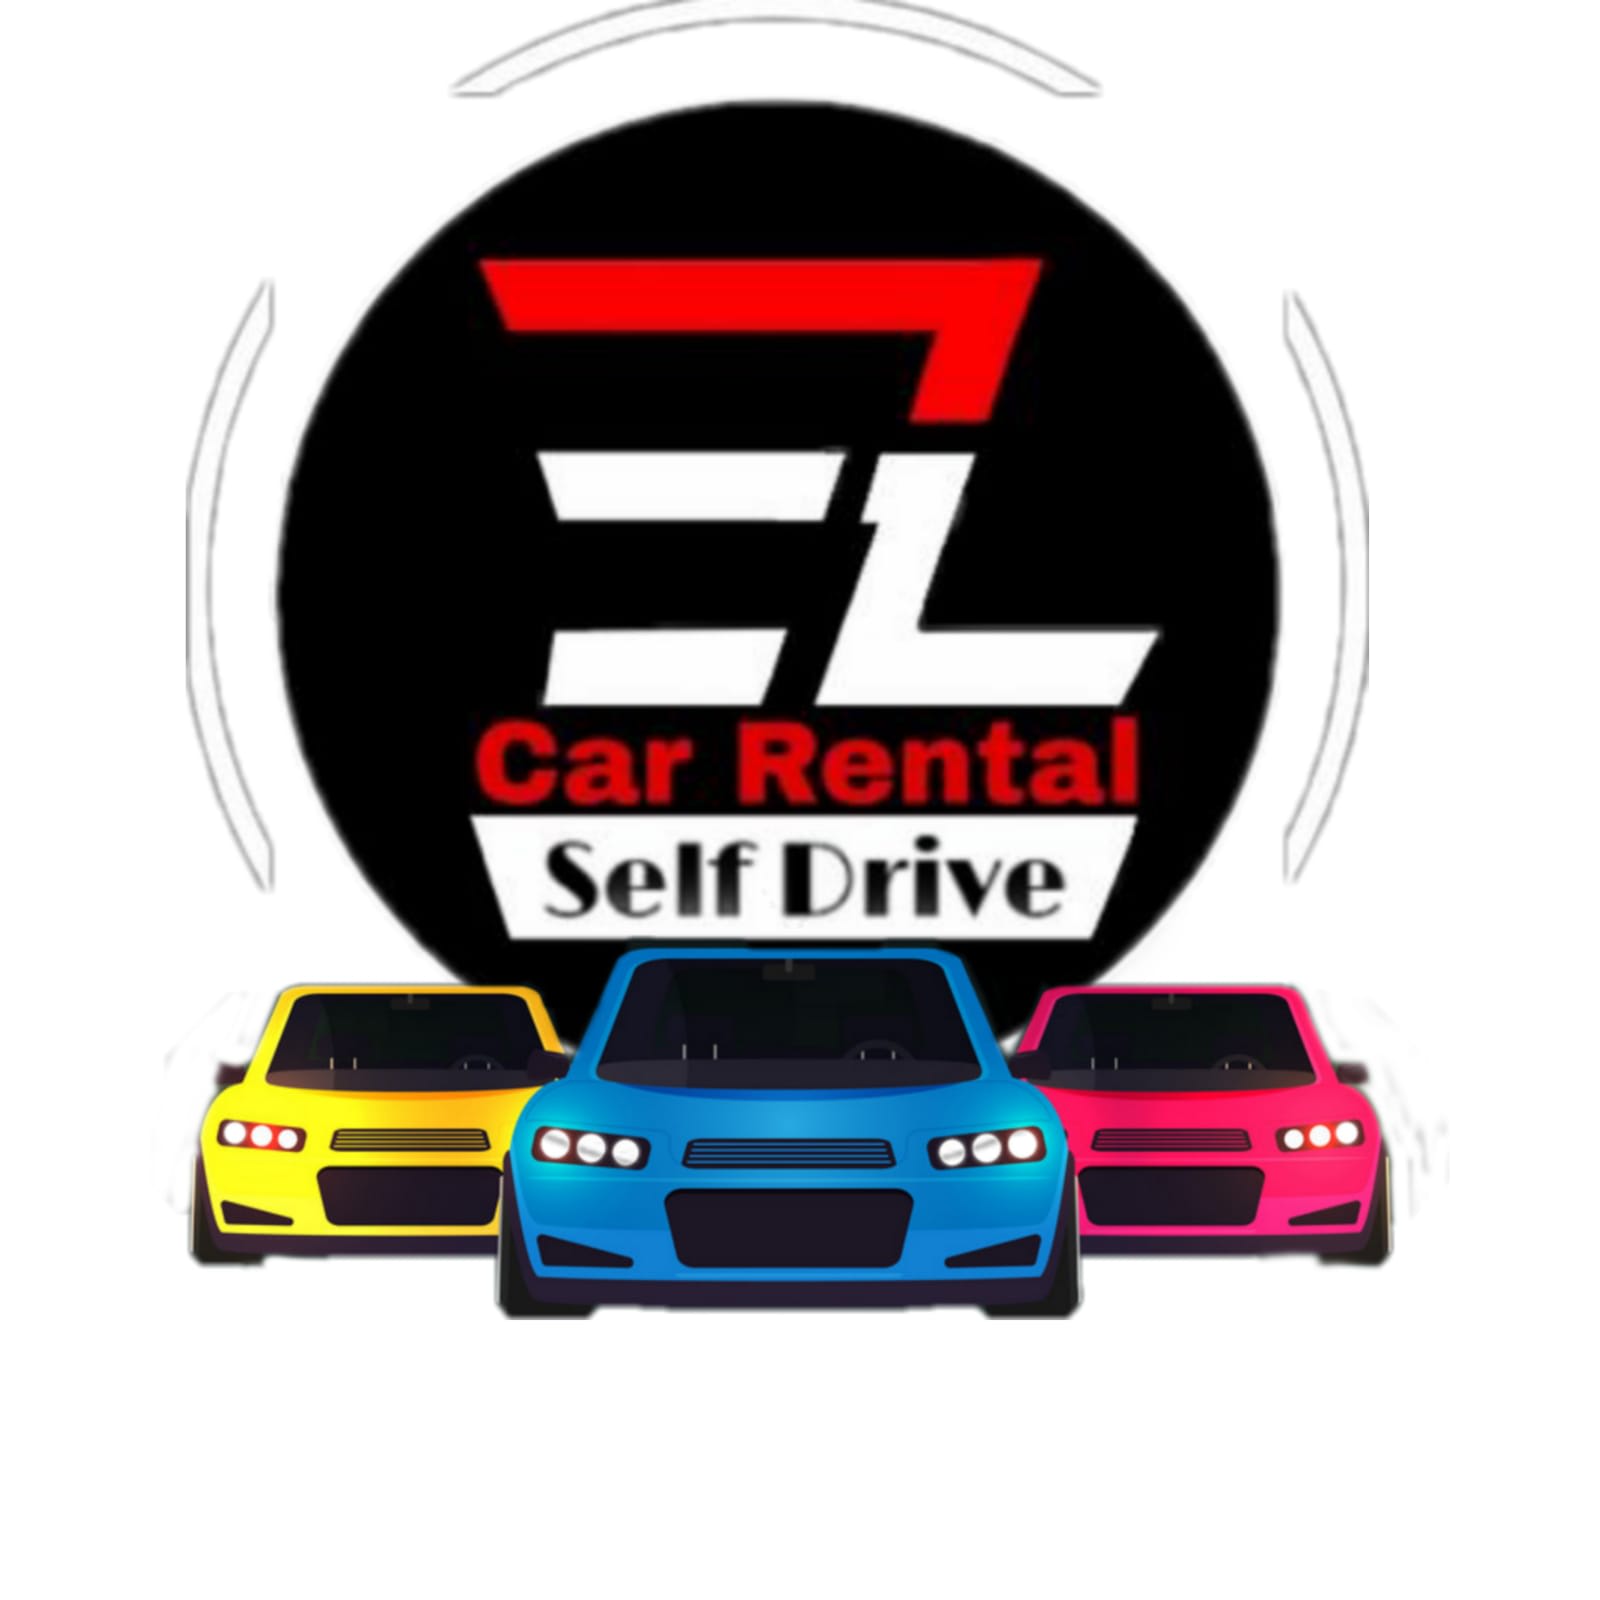 EZ CAR RENTAL (SELF-DRIVE)